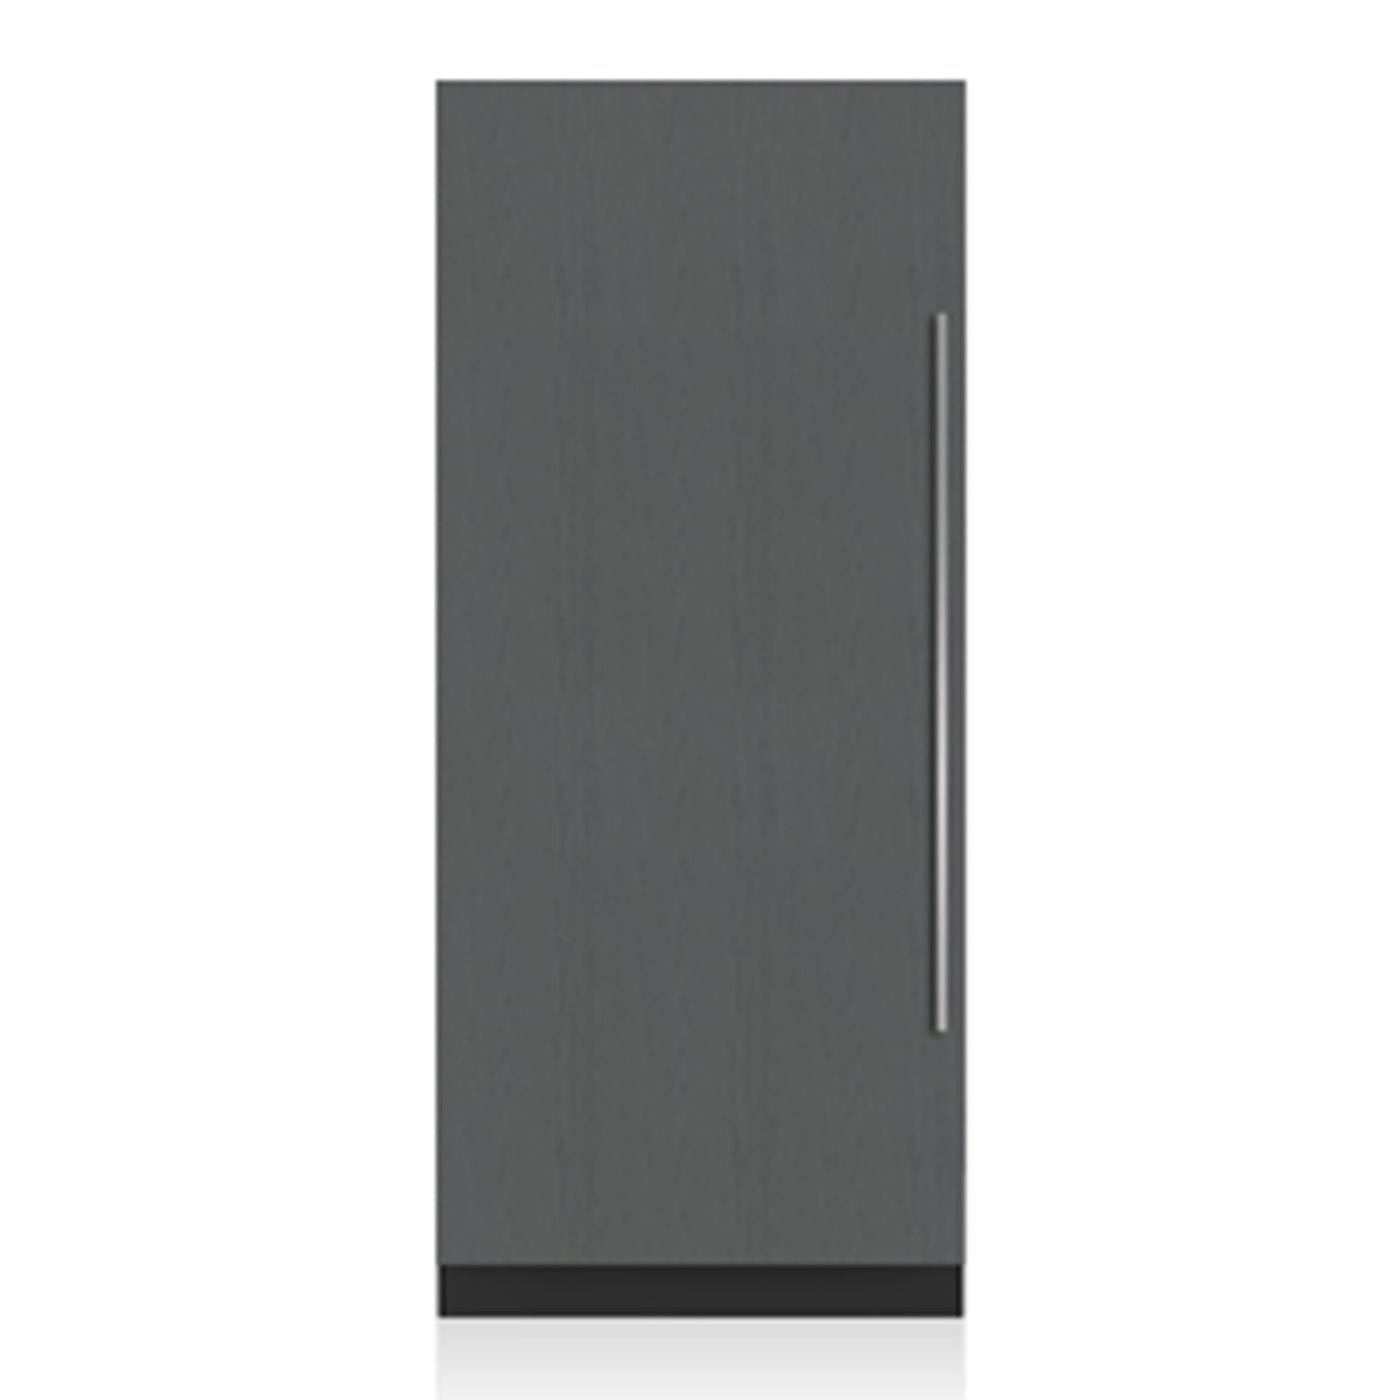 36" Designer Column Refrigerator - Panel Ready